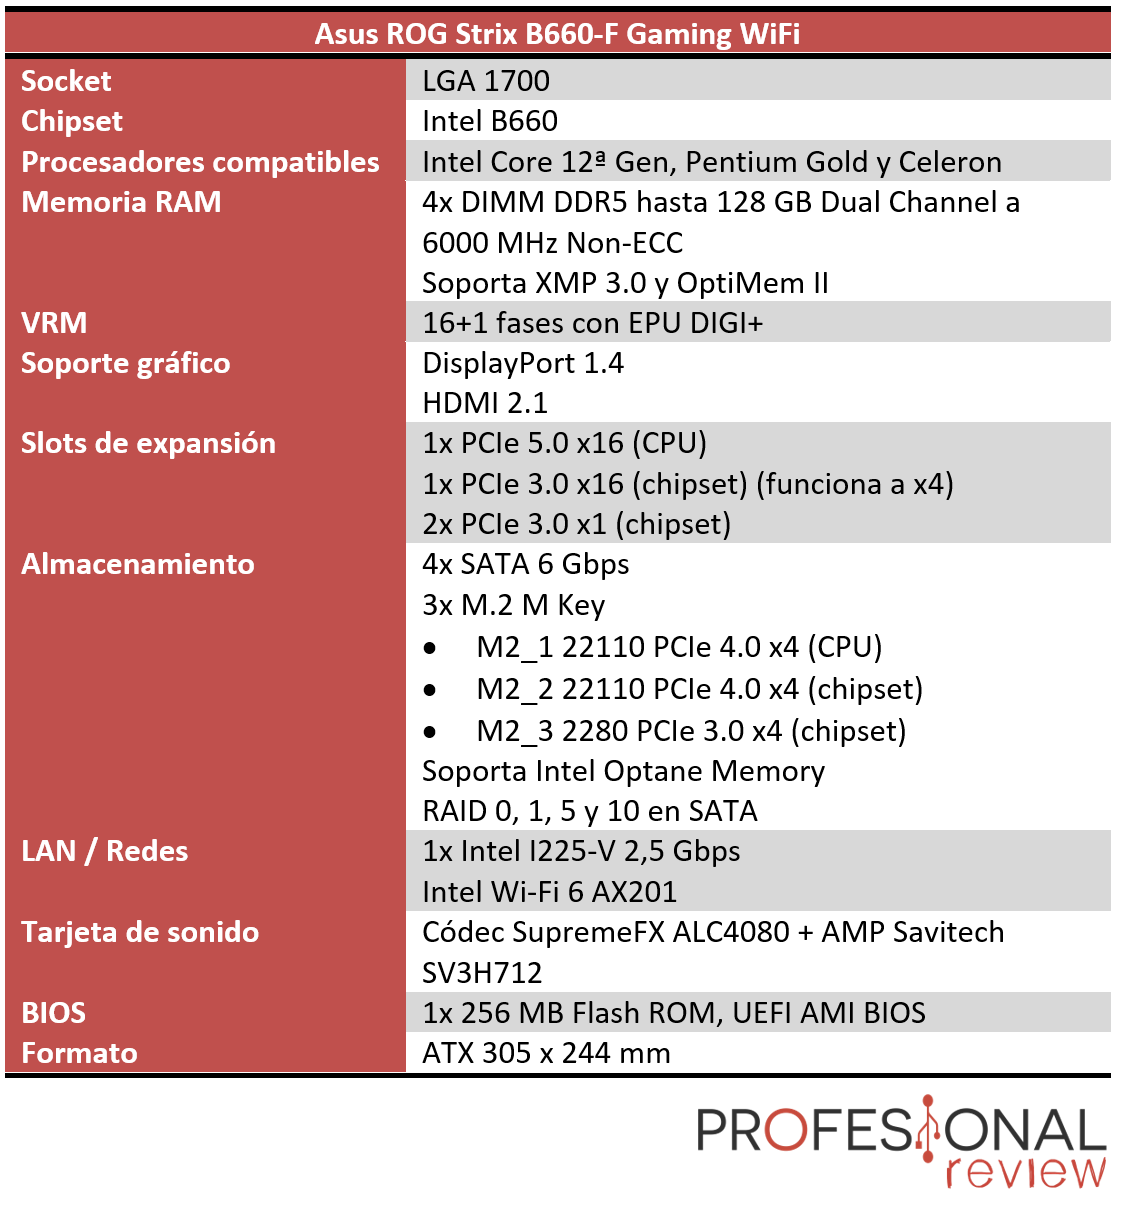 Asus ROG Strix B660-F Gaming WiFi Características